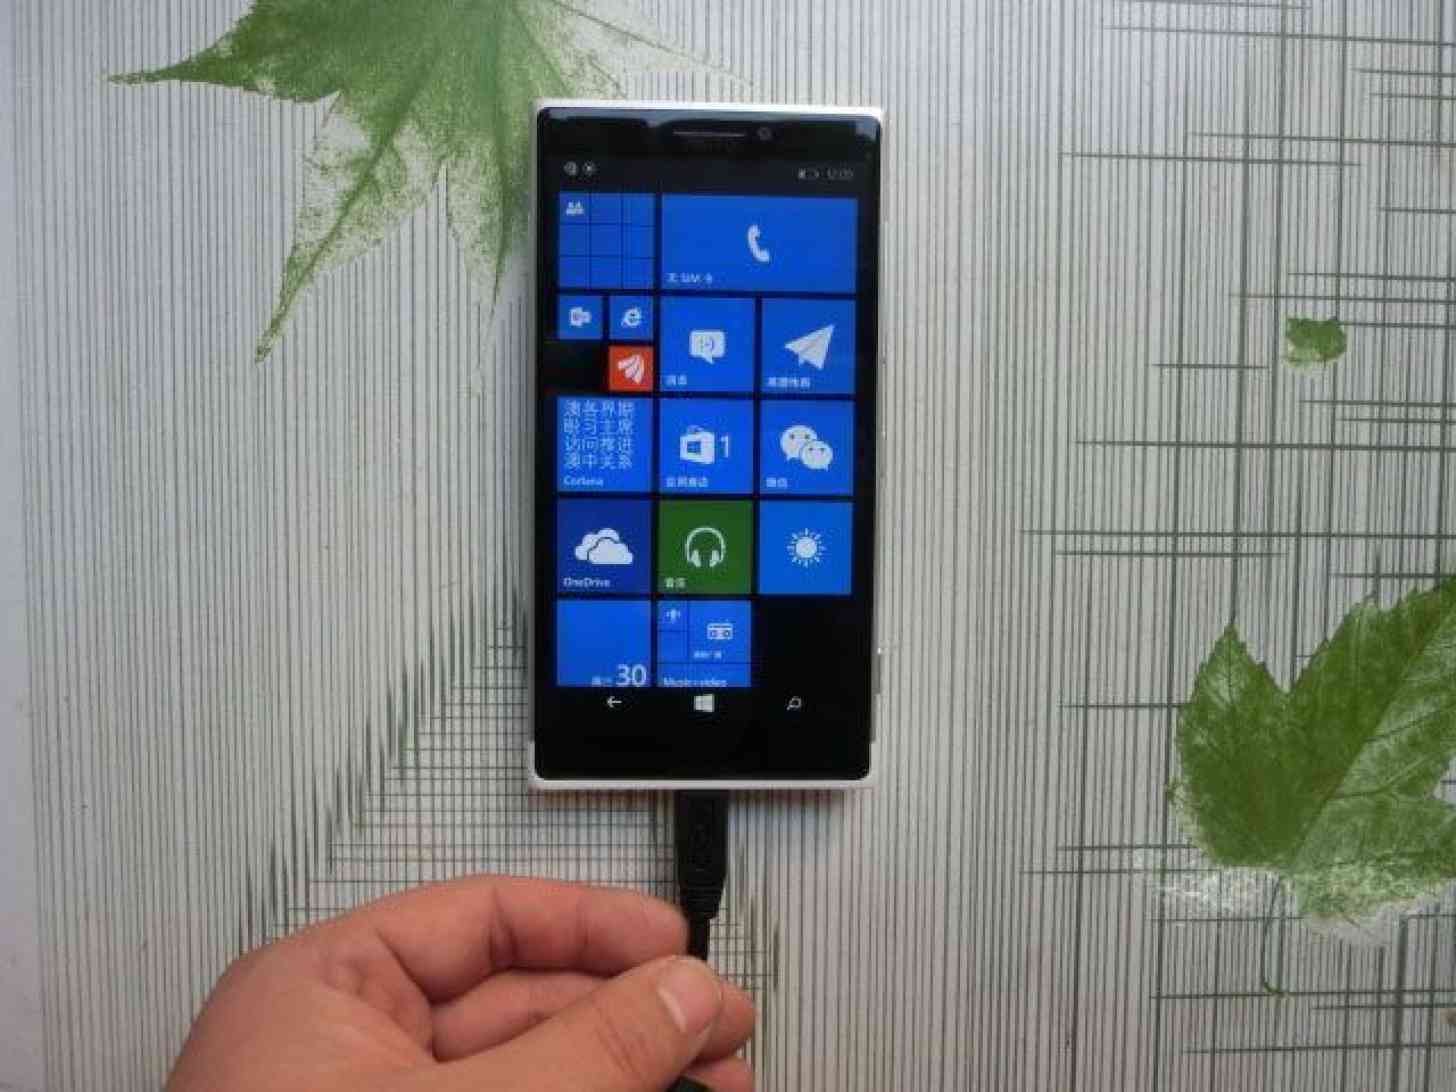 Nokia RM-1052 Microsoft Windows Phone prototype Lumia 1020 front